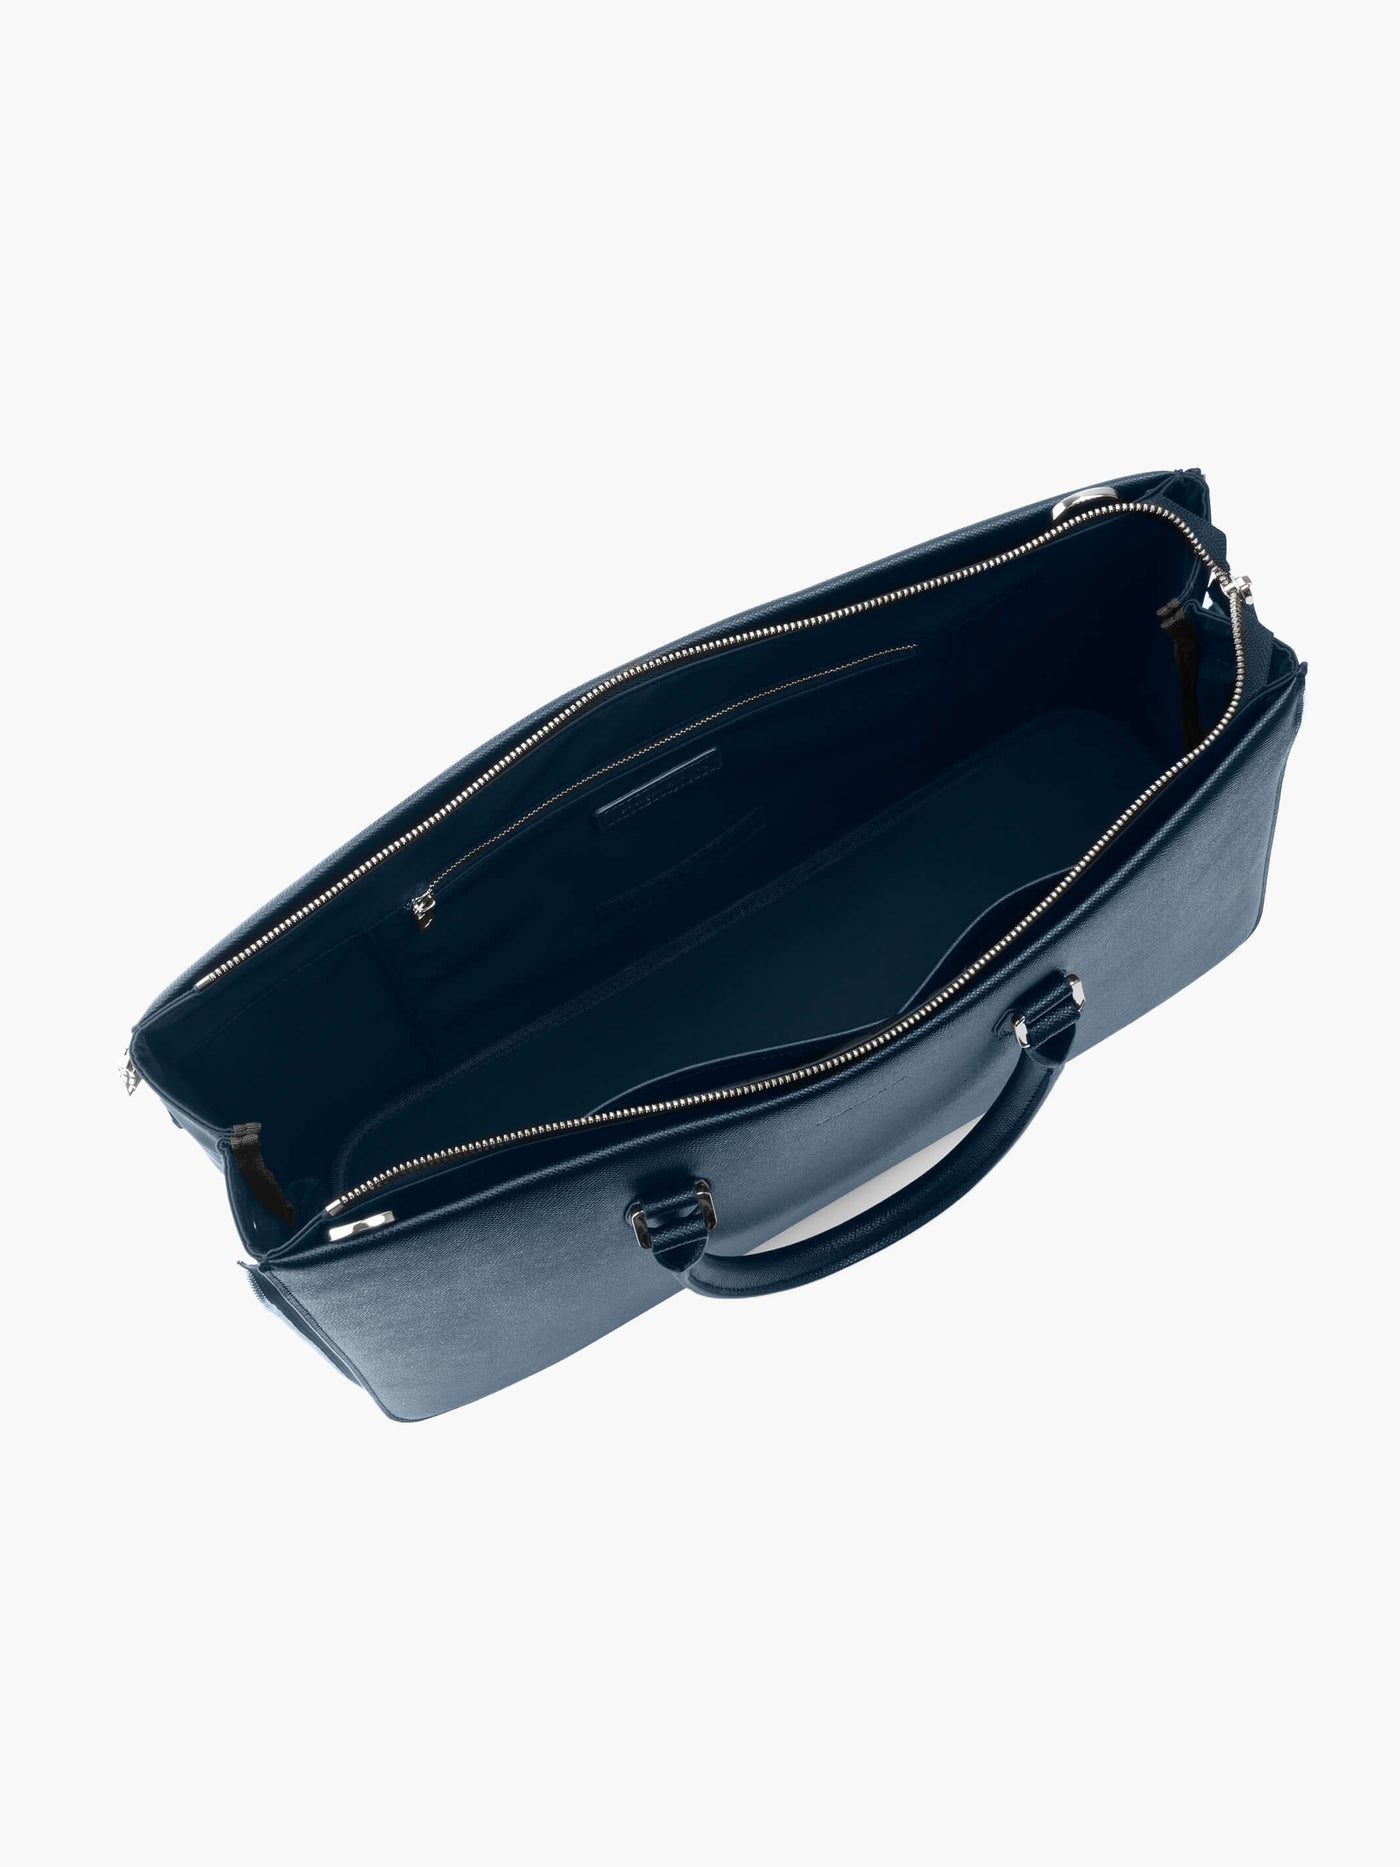 Gianni Conti Alex & Co Italian Leather Laptop Messenger Briefbag Dark -  Travel Trek Luggage & Travel Gear